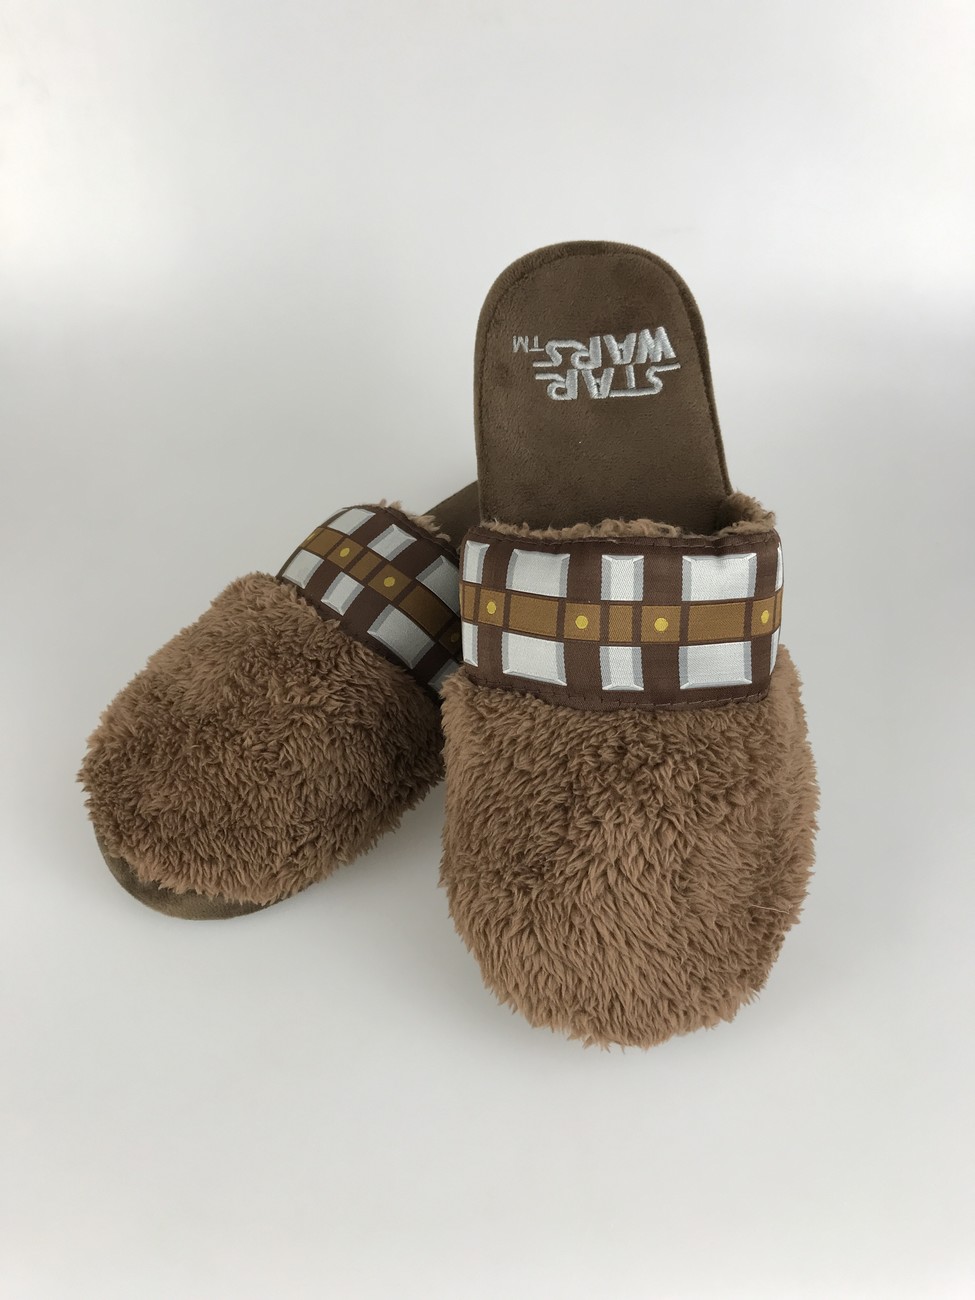 Verwisselbaar chrysant Interpunctie Pantoffels Star Wars - Chewbacca | Kleding en accessoires voor fans van  merchandise